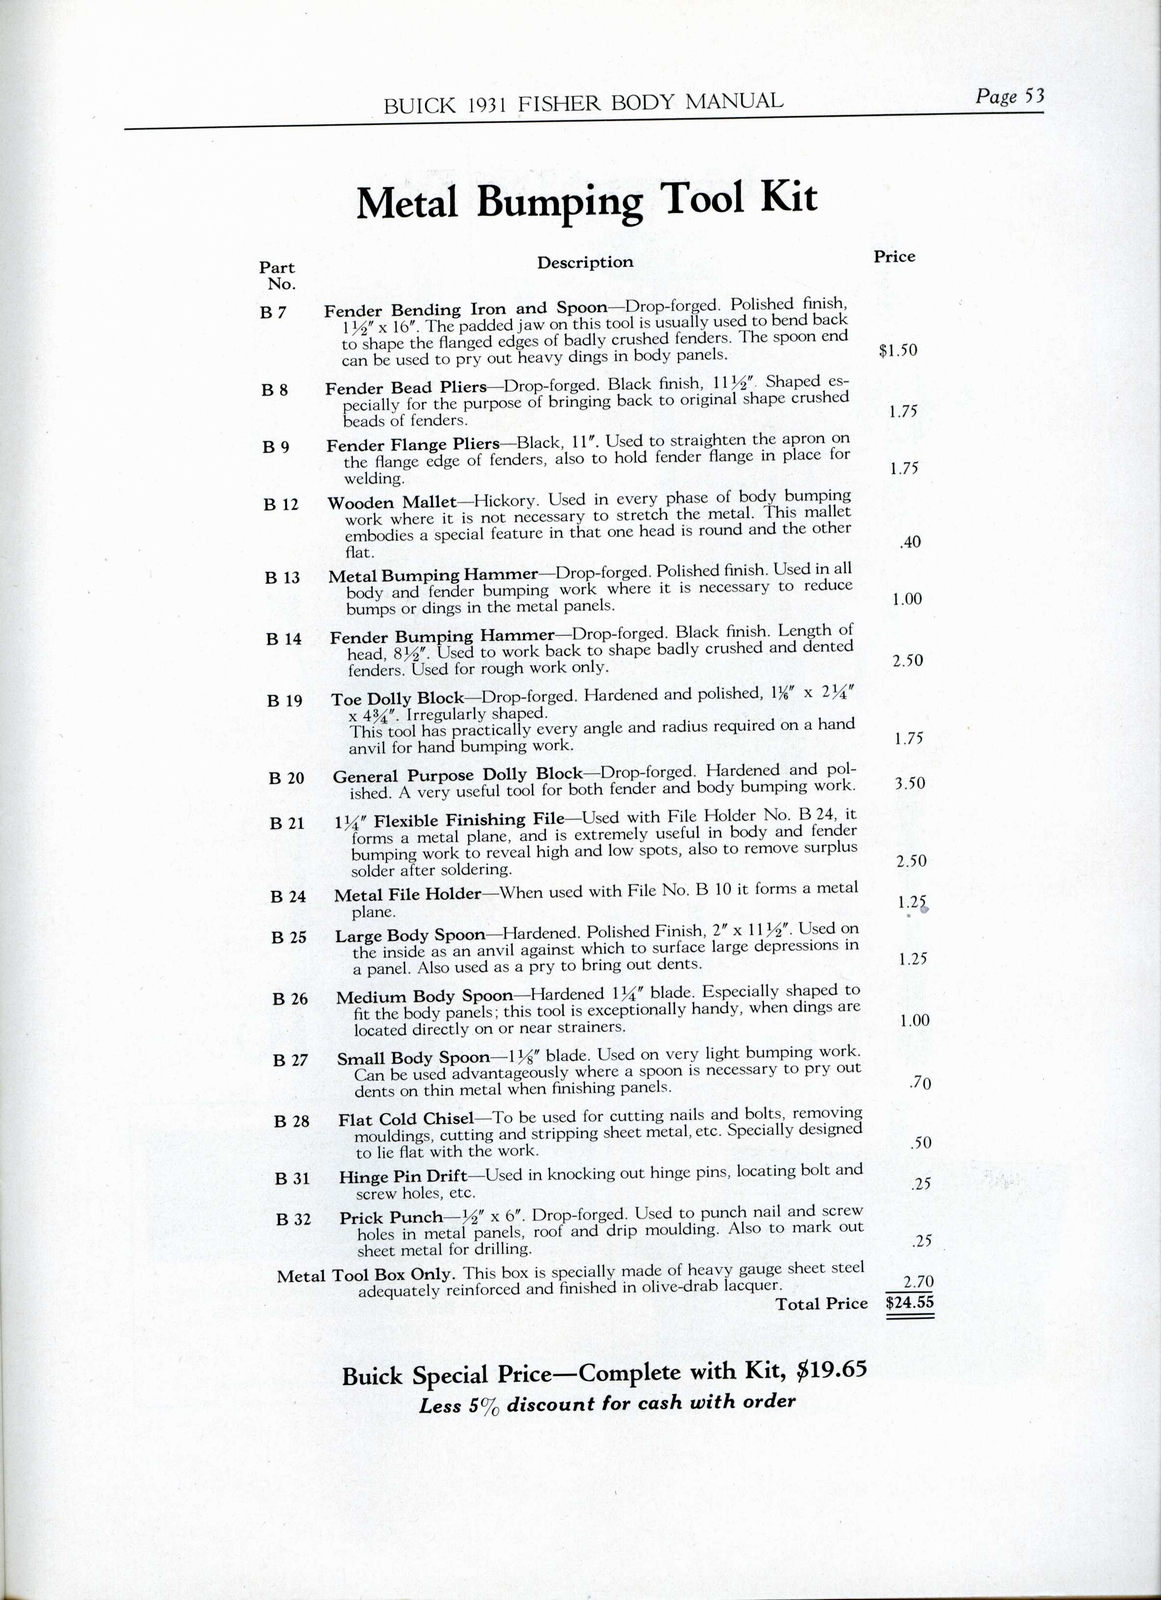 n_1931 Buick Fisher Body Manual-53.jpg